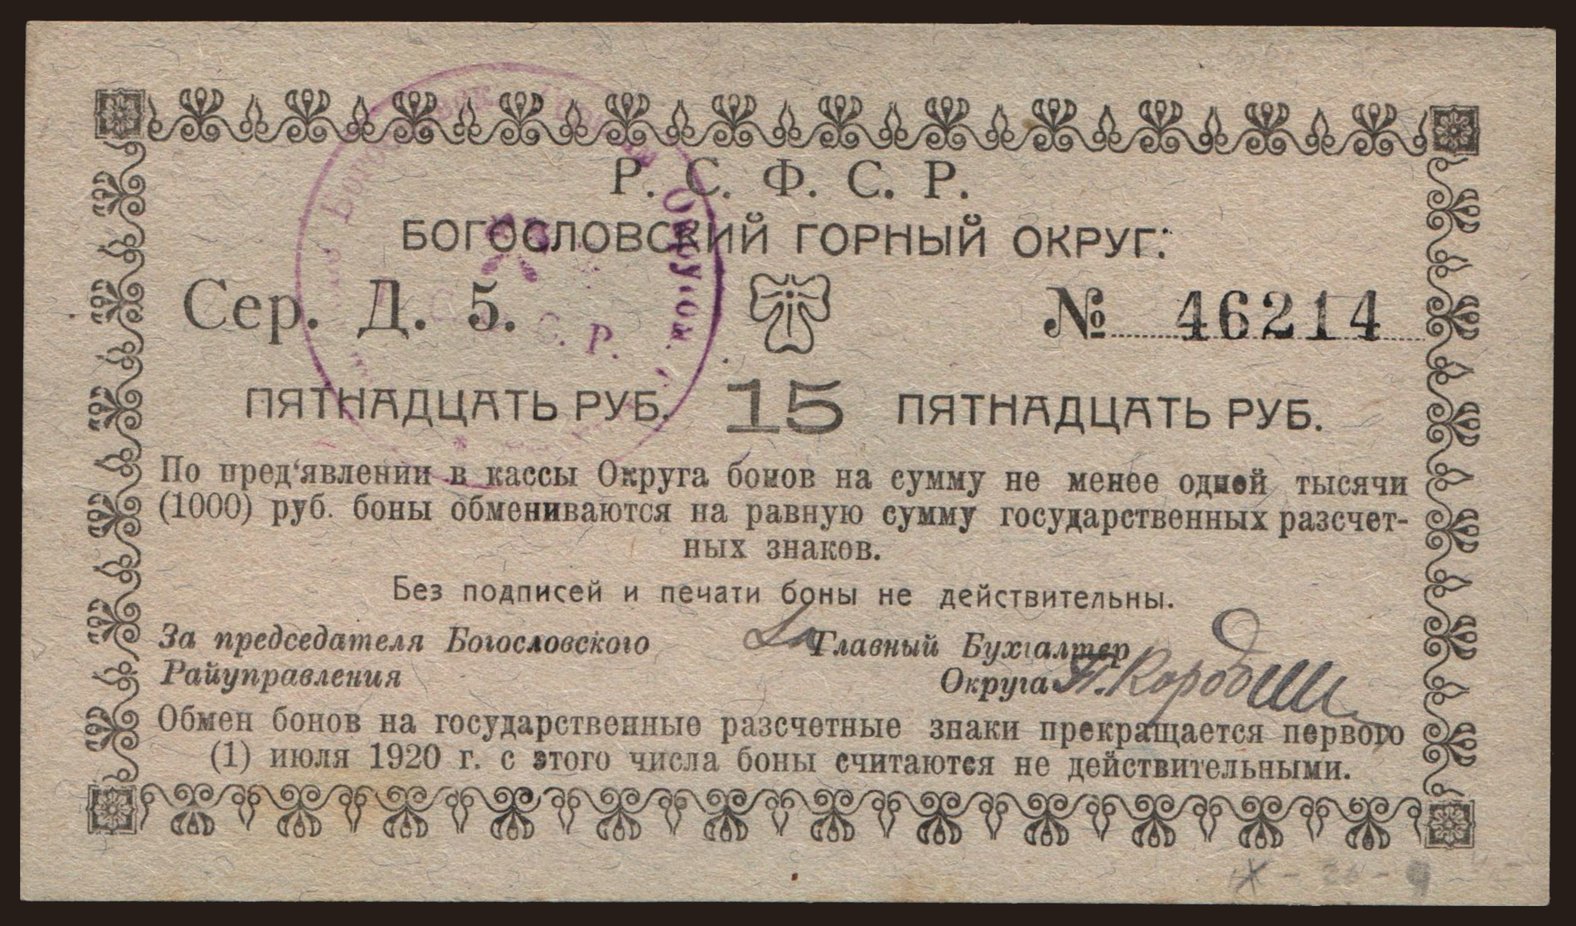 Nadezhdinsk/ Bogoslovskij gornyj okrug, 15 rubel, 1920